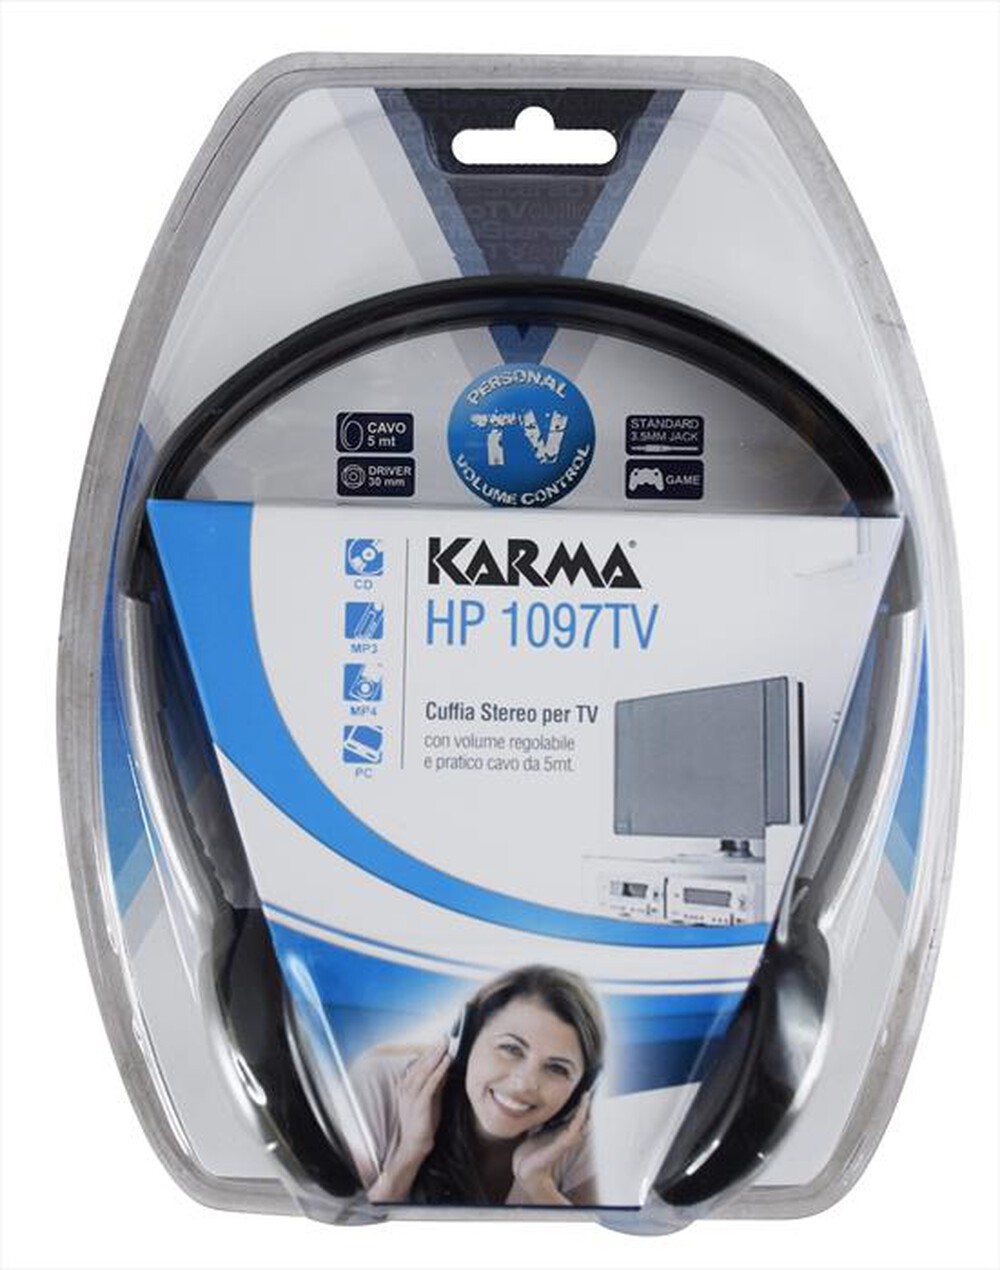 "KARMA - HP 1097TV - Grigio"